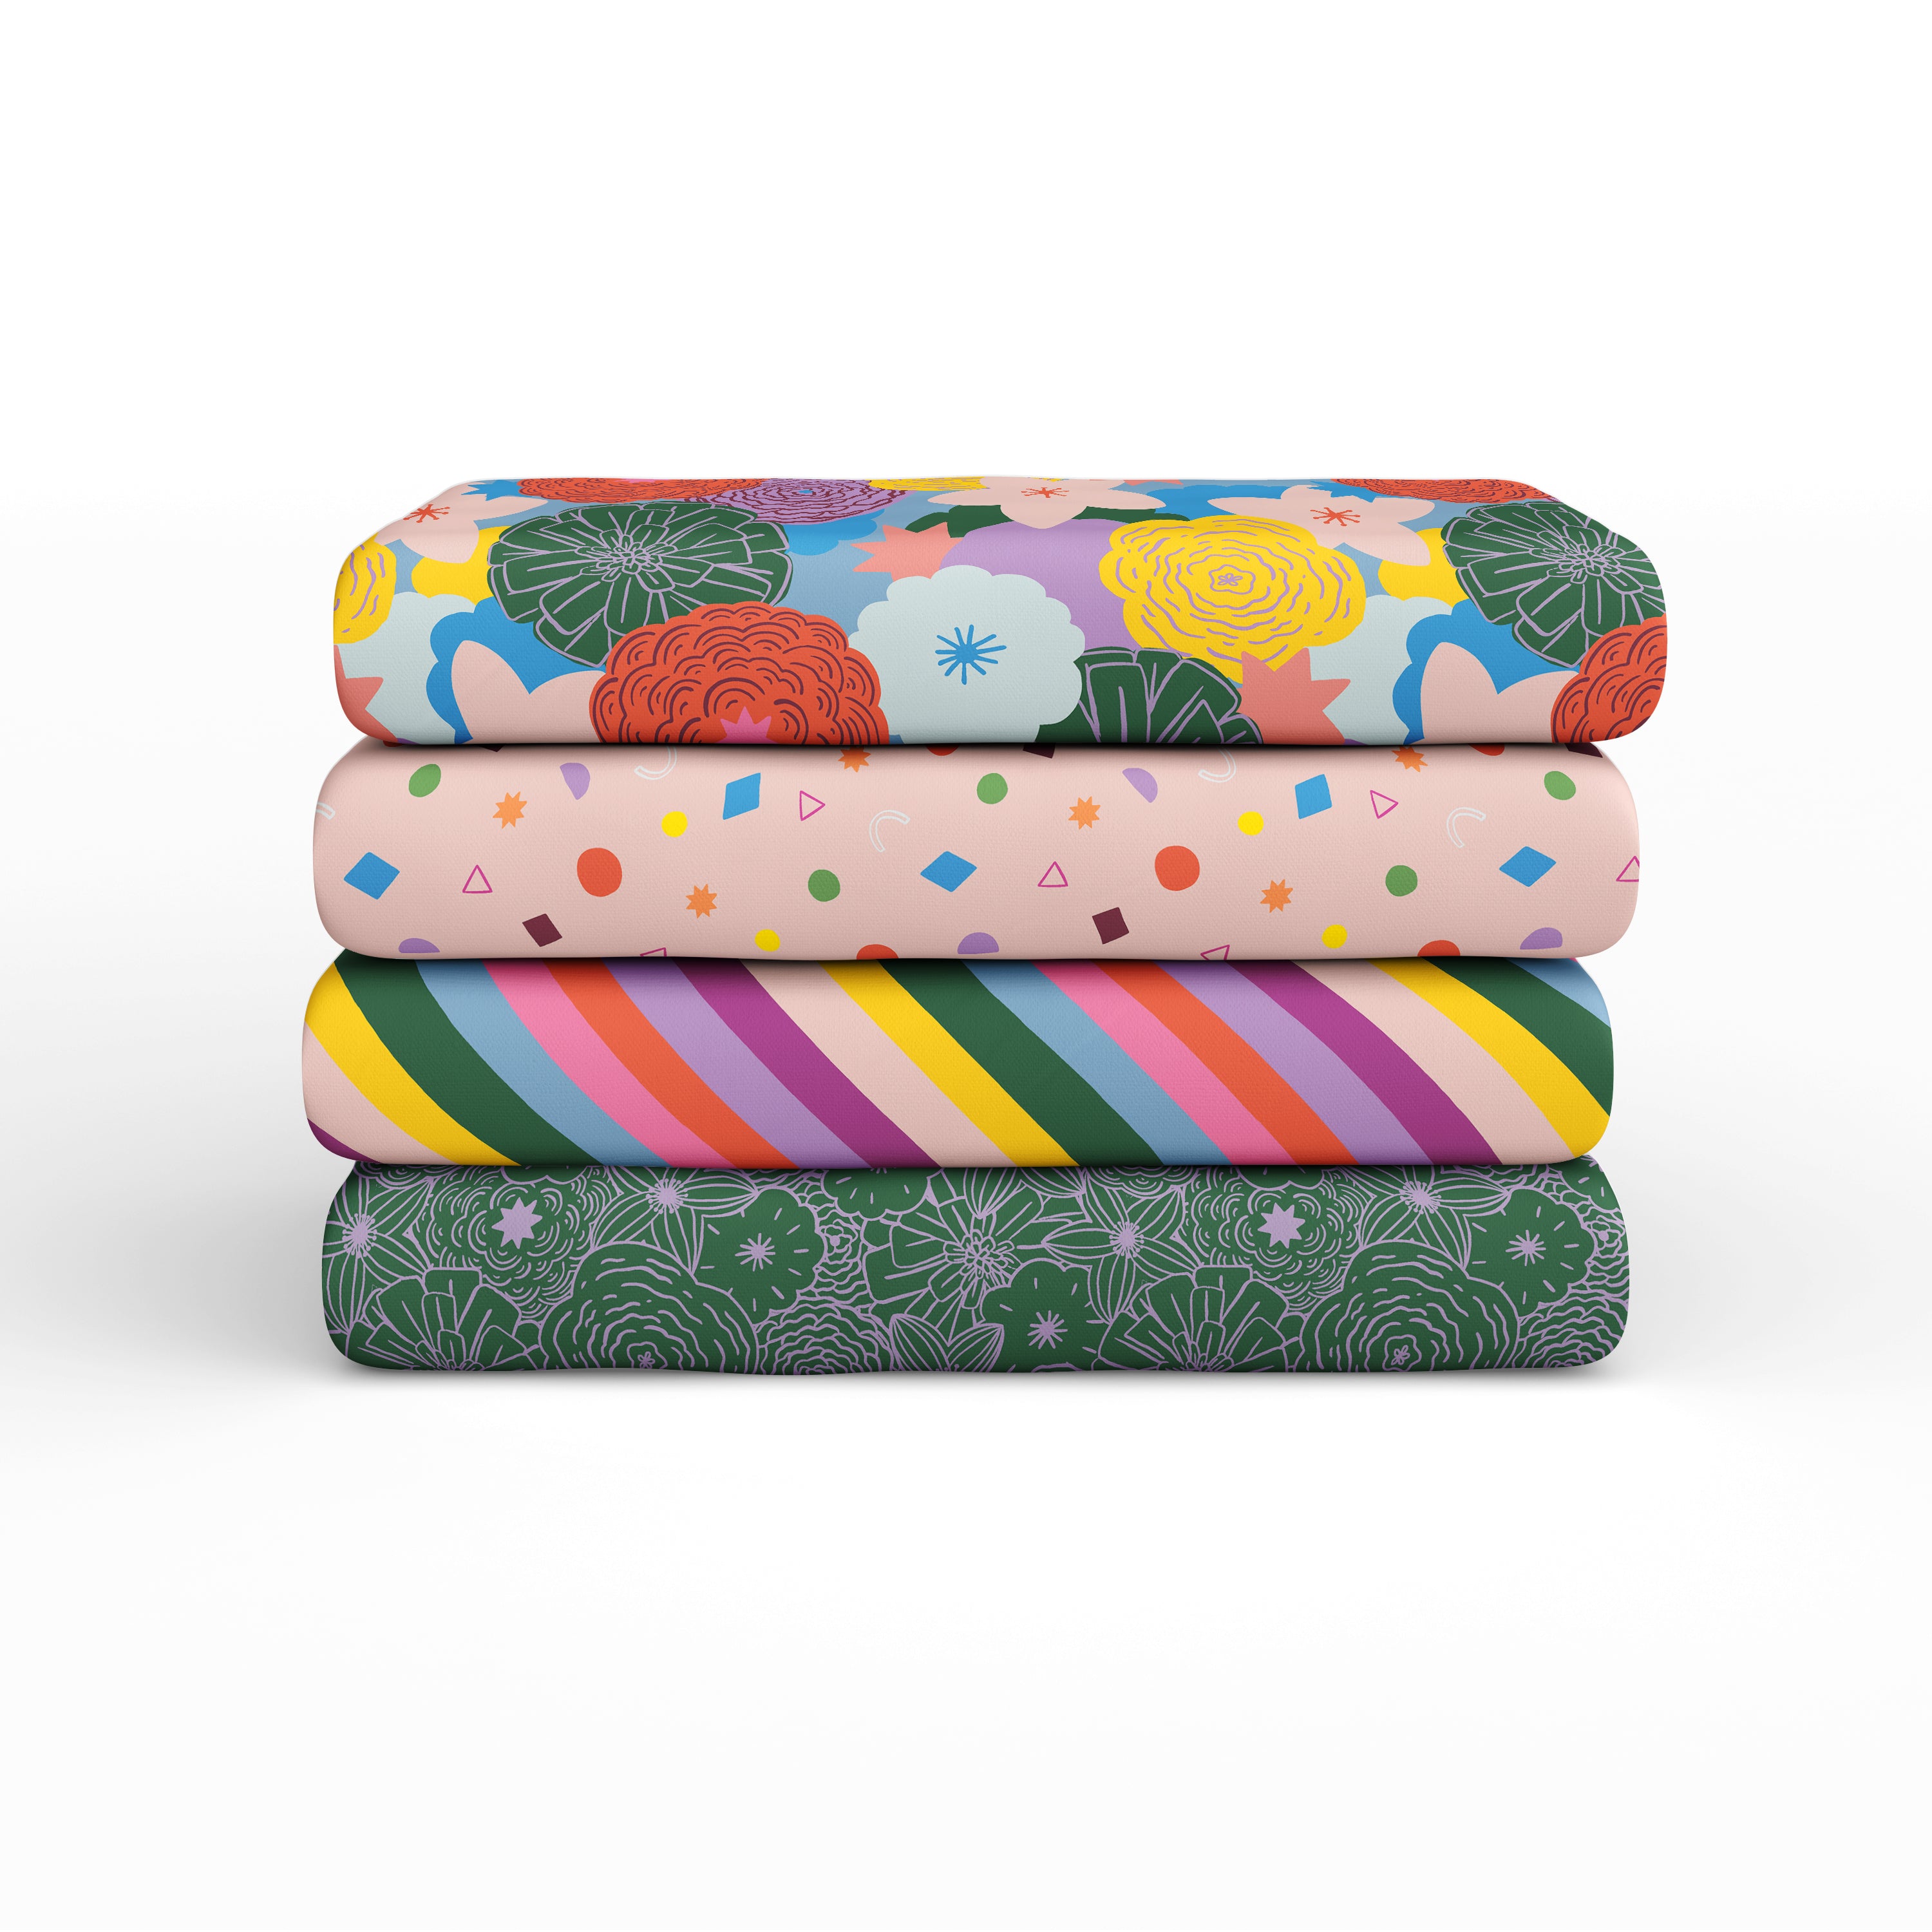 Ripstop - Orange – Paintbrush Studio Fabrics